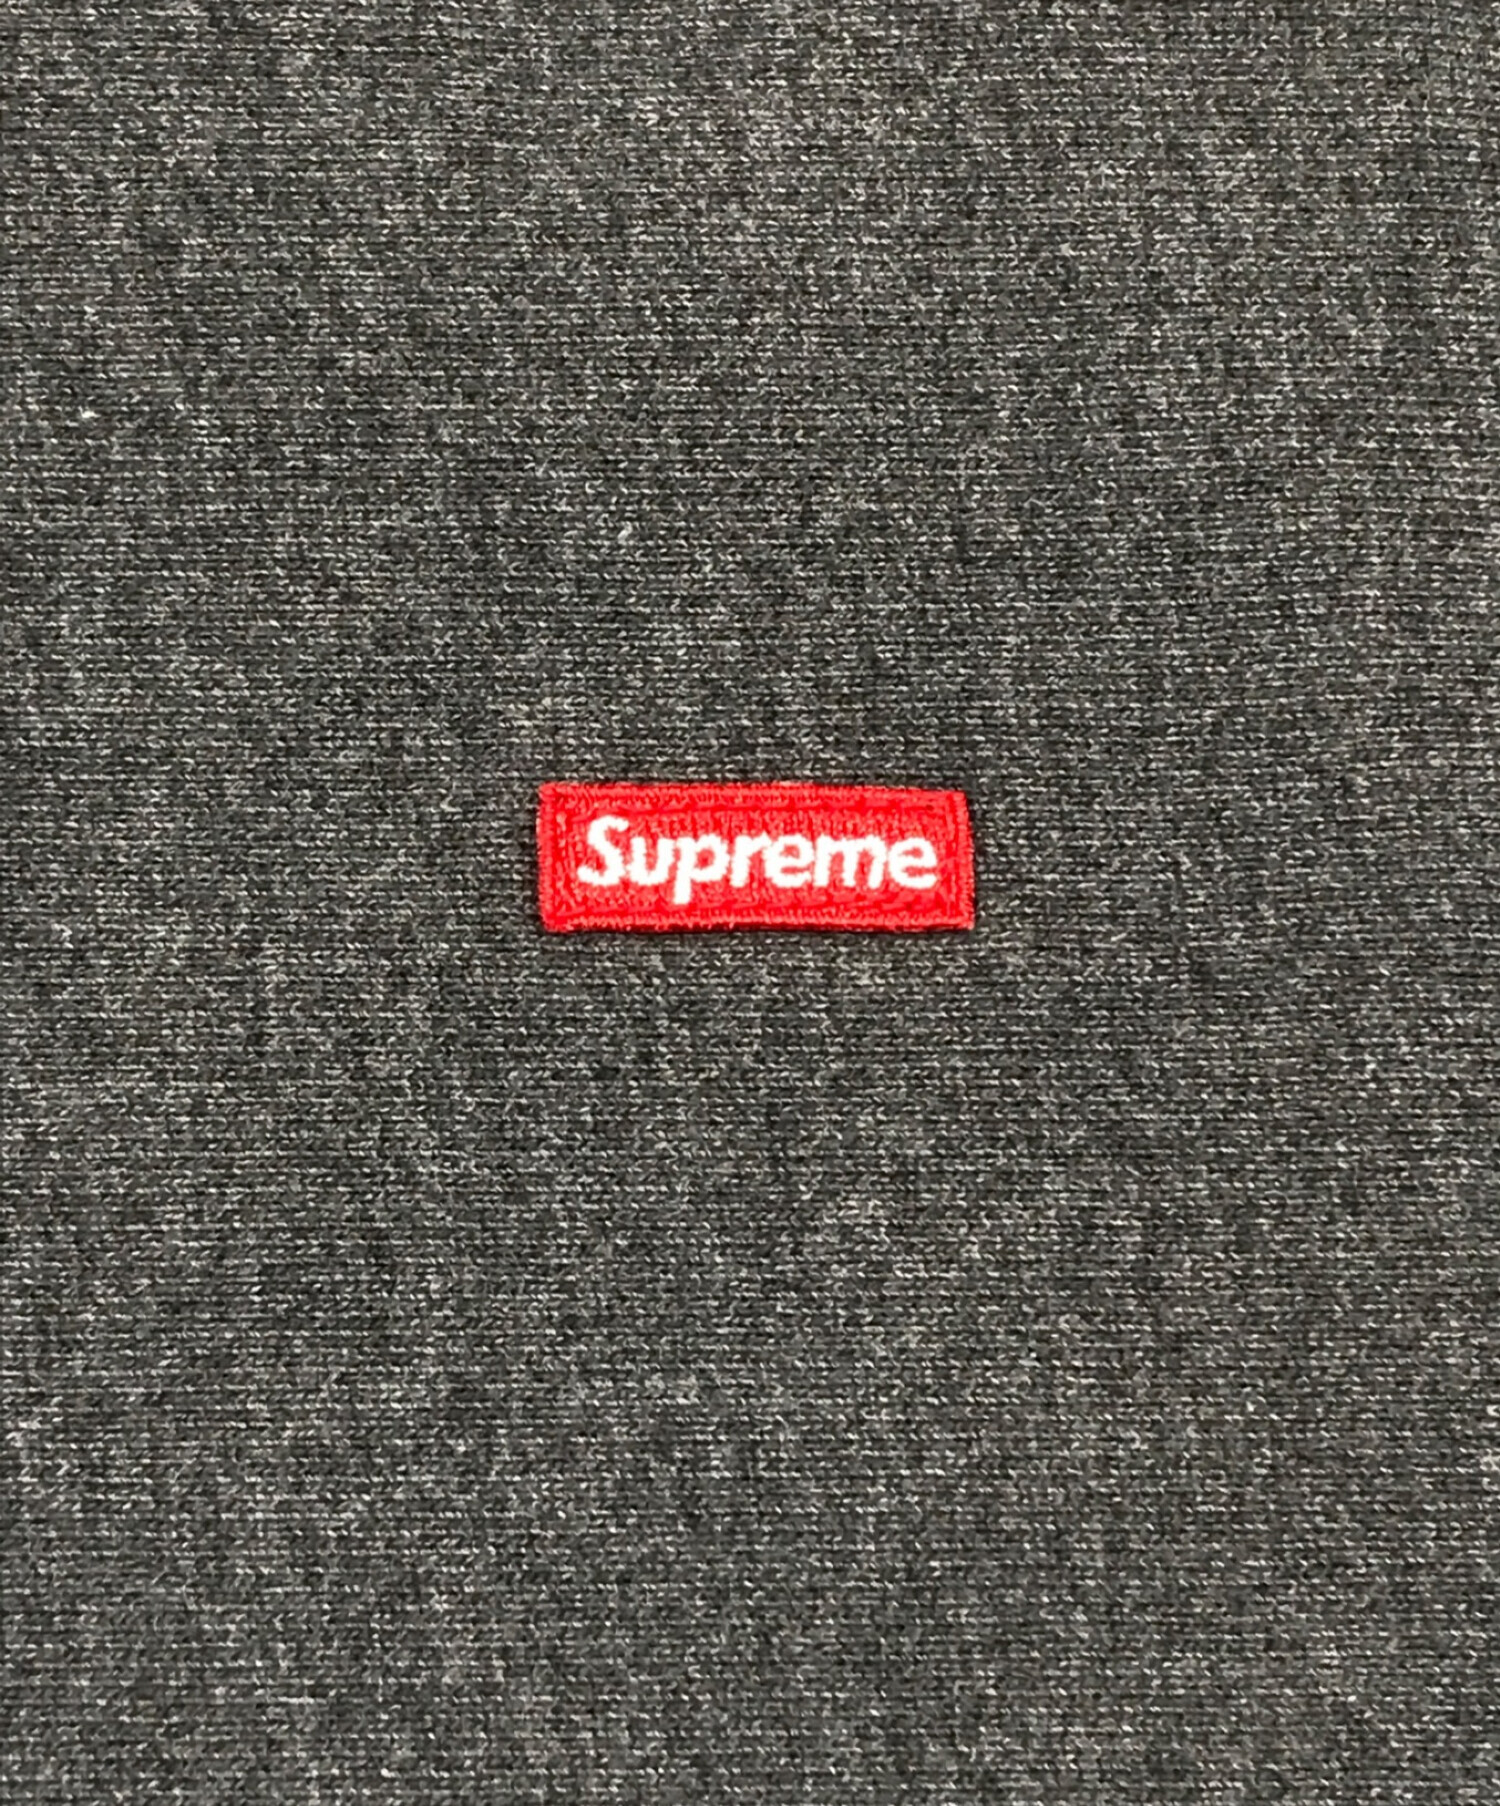 (S)Supreme Small Box Logo Sweatshirtグレー